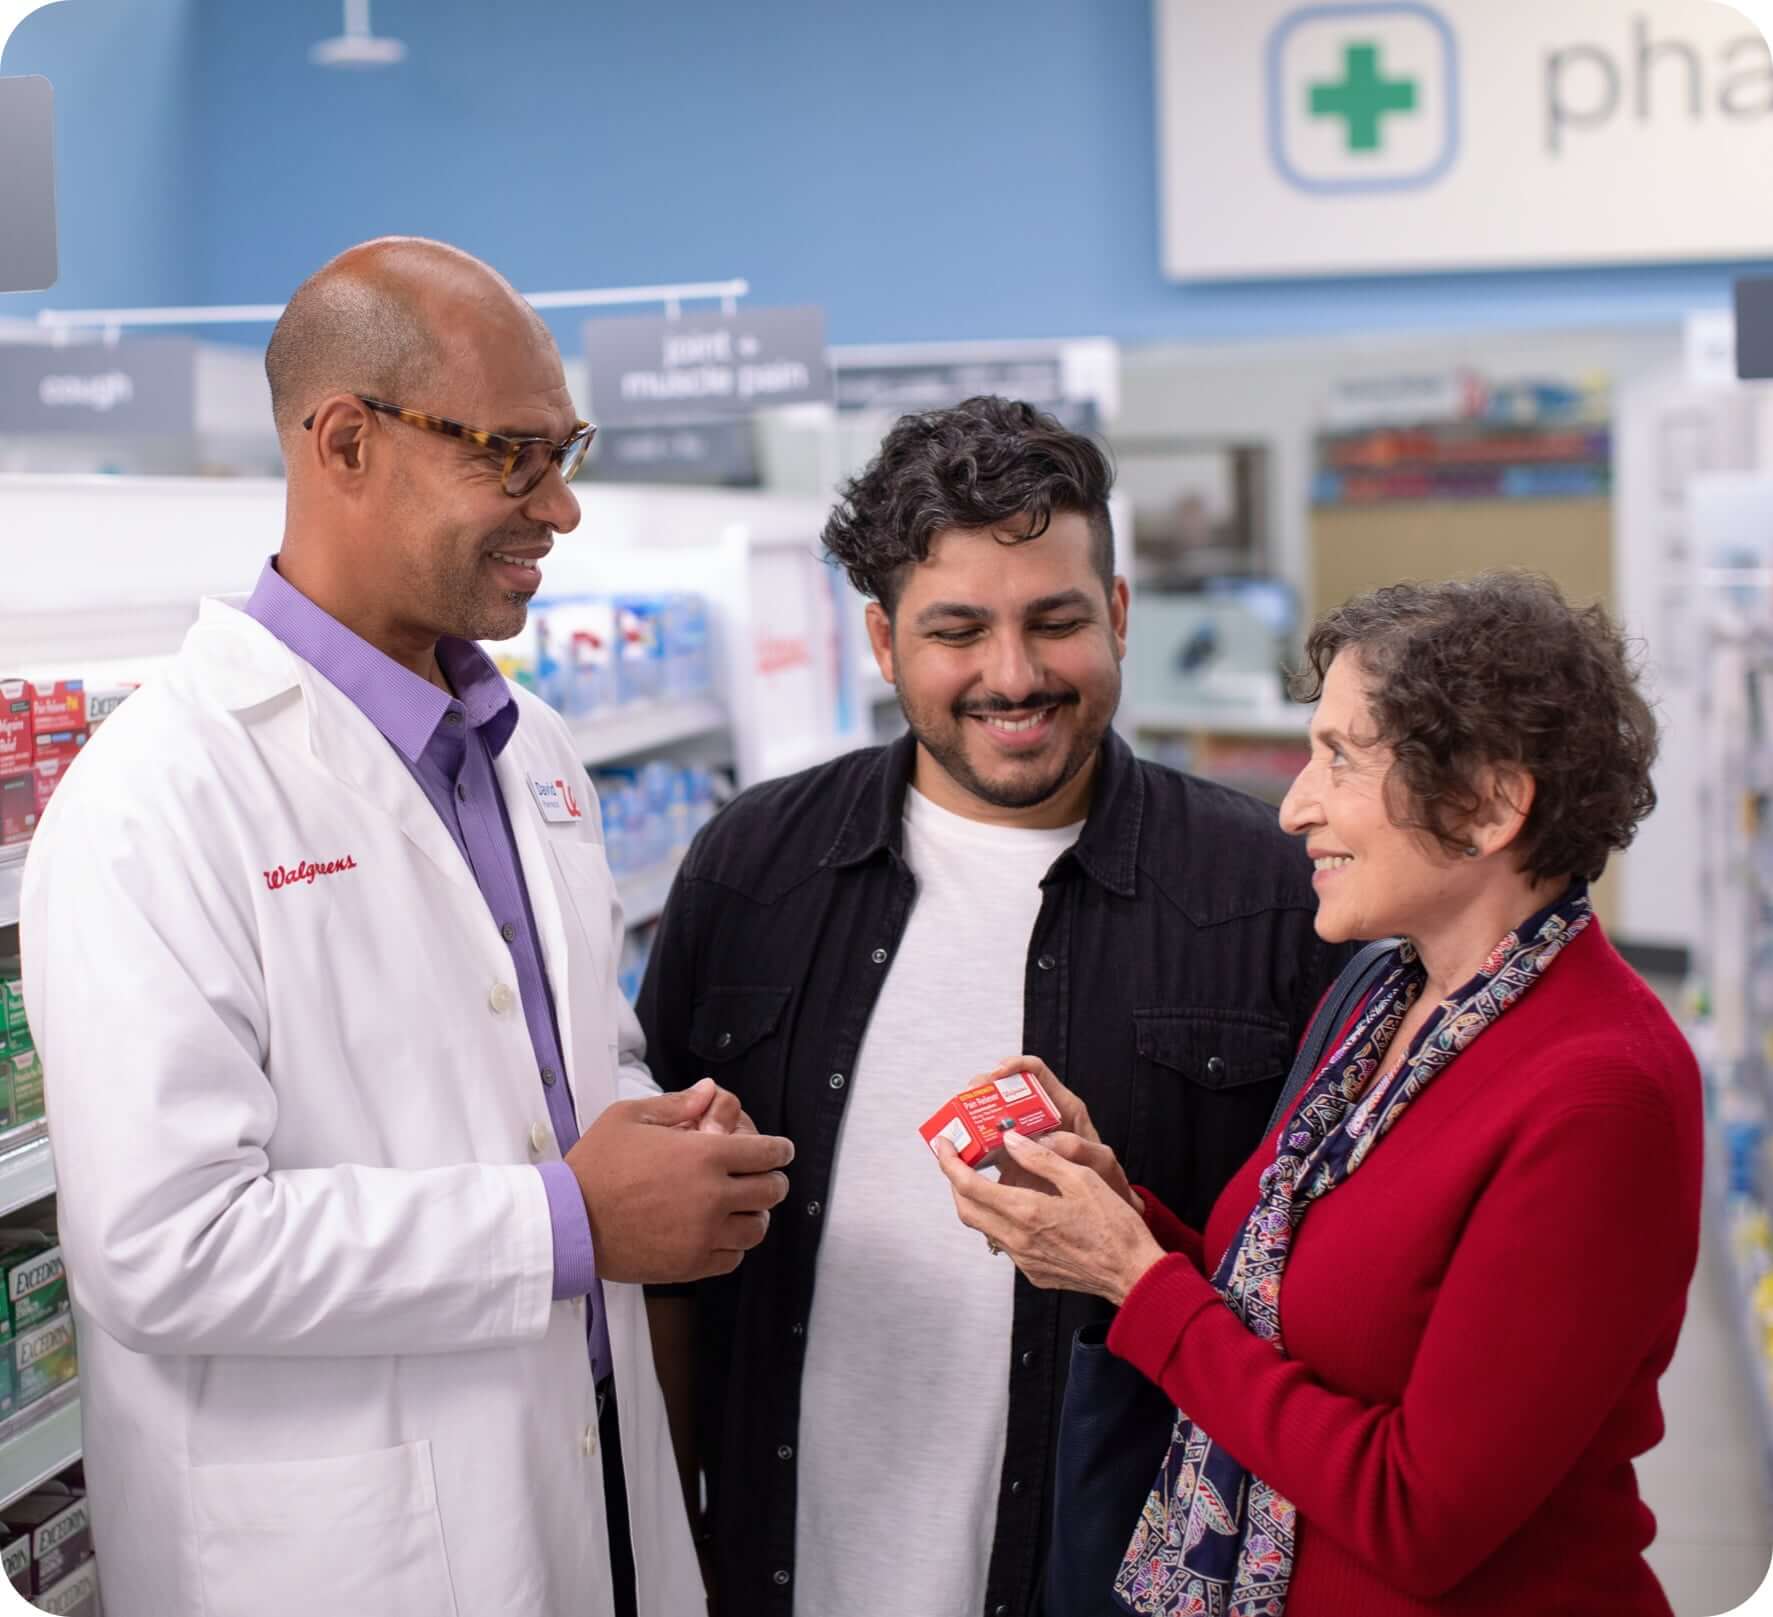 Walgreens pharmacist assisting in-store customers